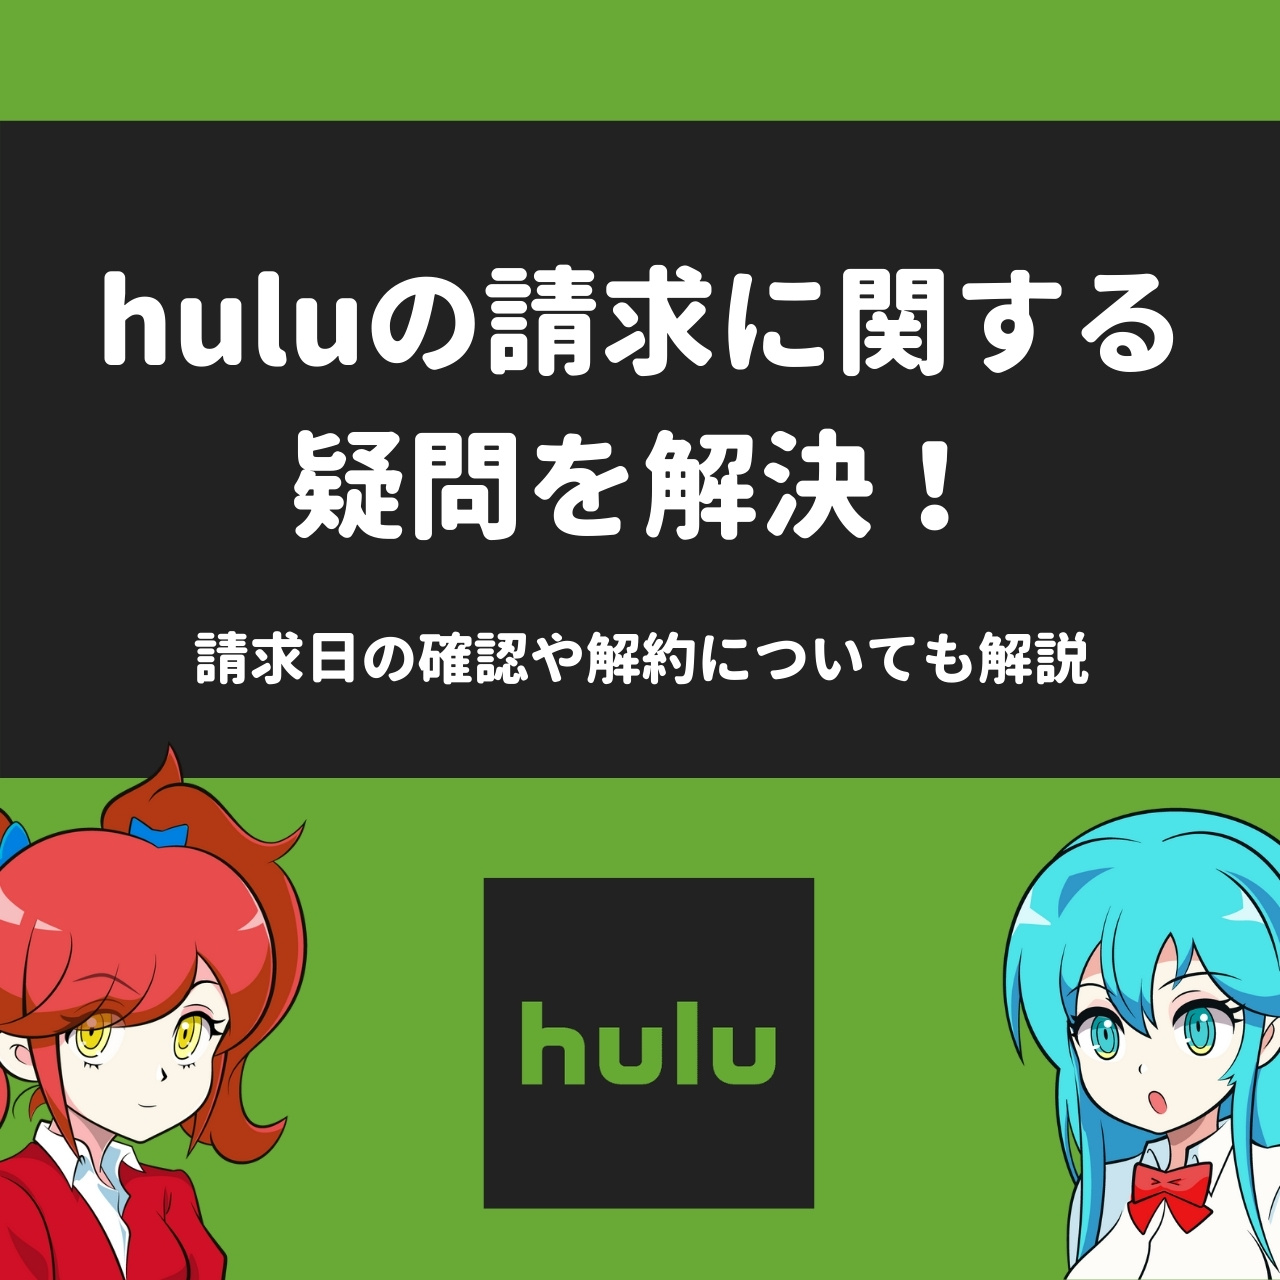 Huluは口座振替も可能 クレカなしでも登録できる方法とは アニメガホン